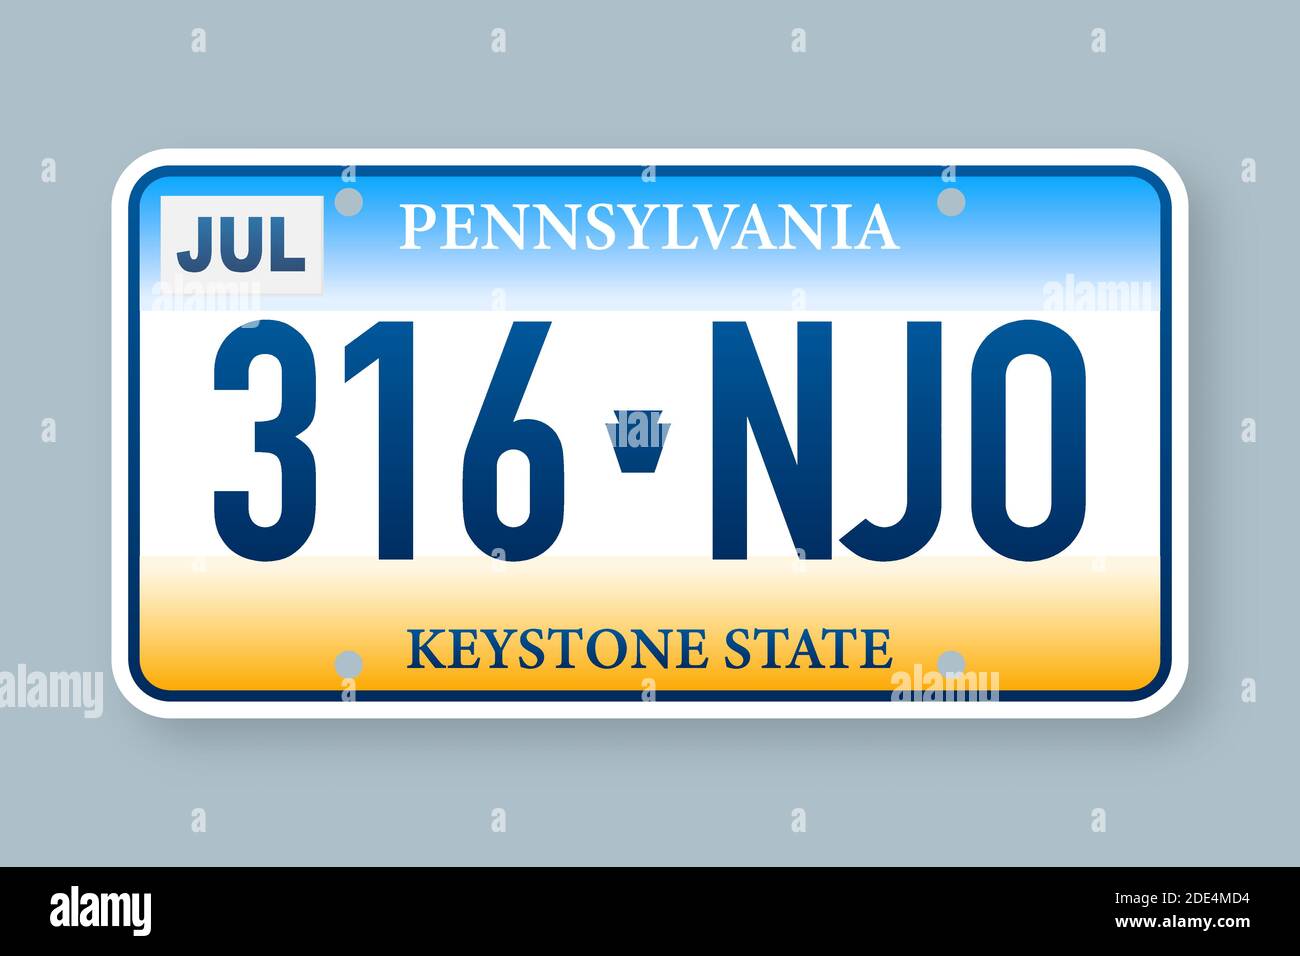 License plate pennsylvania. Vector illustration on white background. Stock Vector